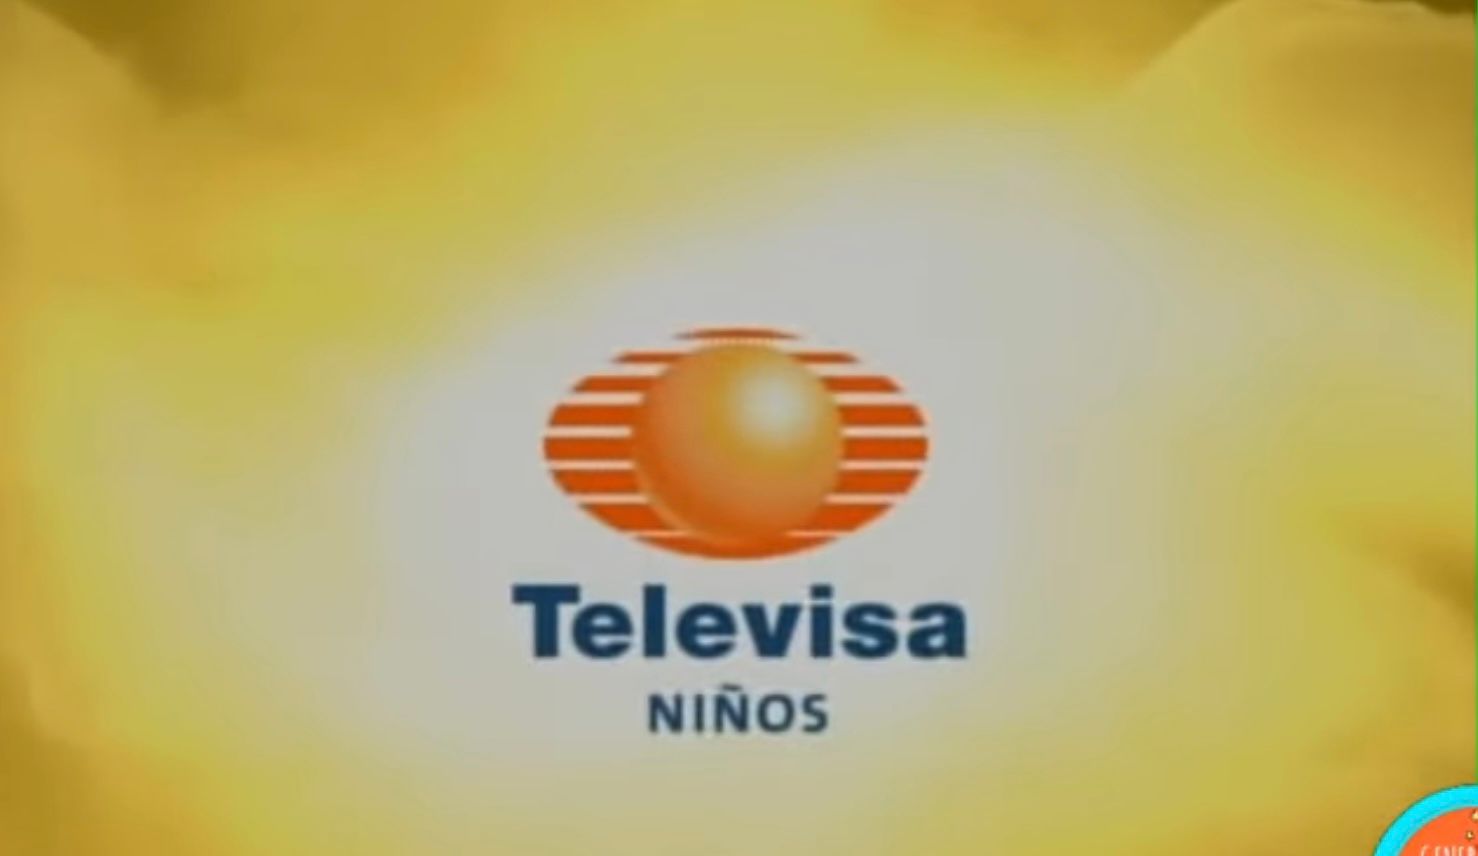 Televisa Niños inició en 1996 con "Luz Clarita"
(Foto: Twitter/@generaciontn)